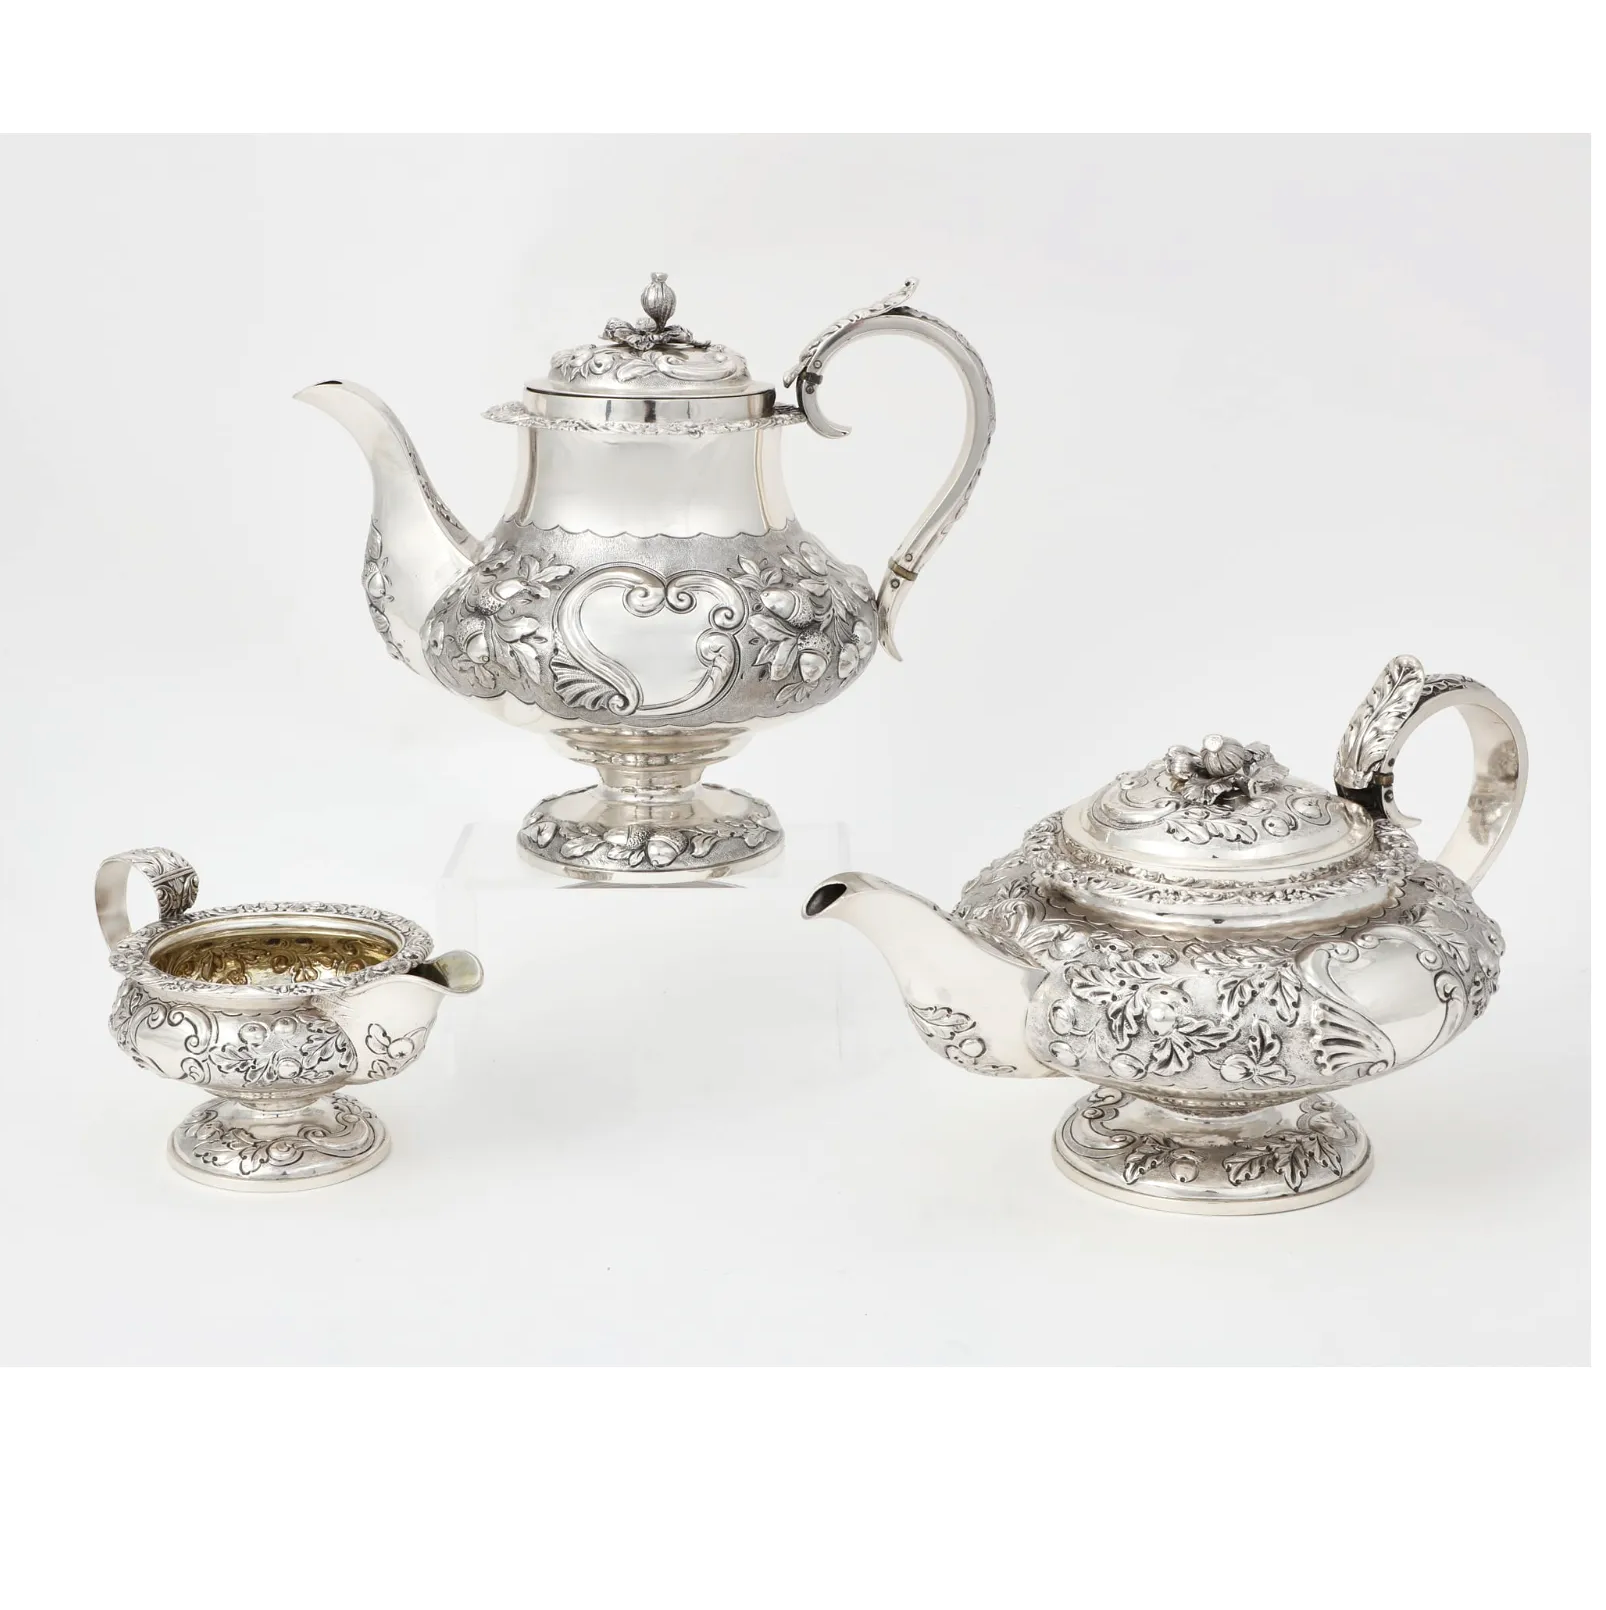 DA2-009: Circa 1825 George IV Silver Partial Tea and Coffee Service - Napthali Hart, London